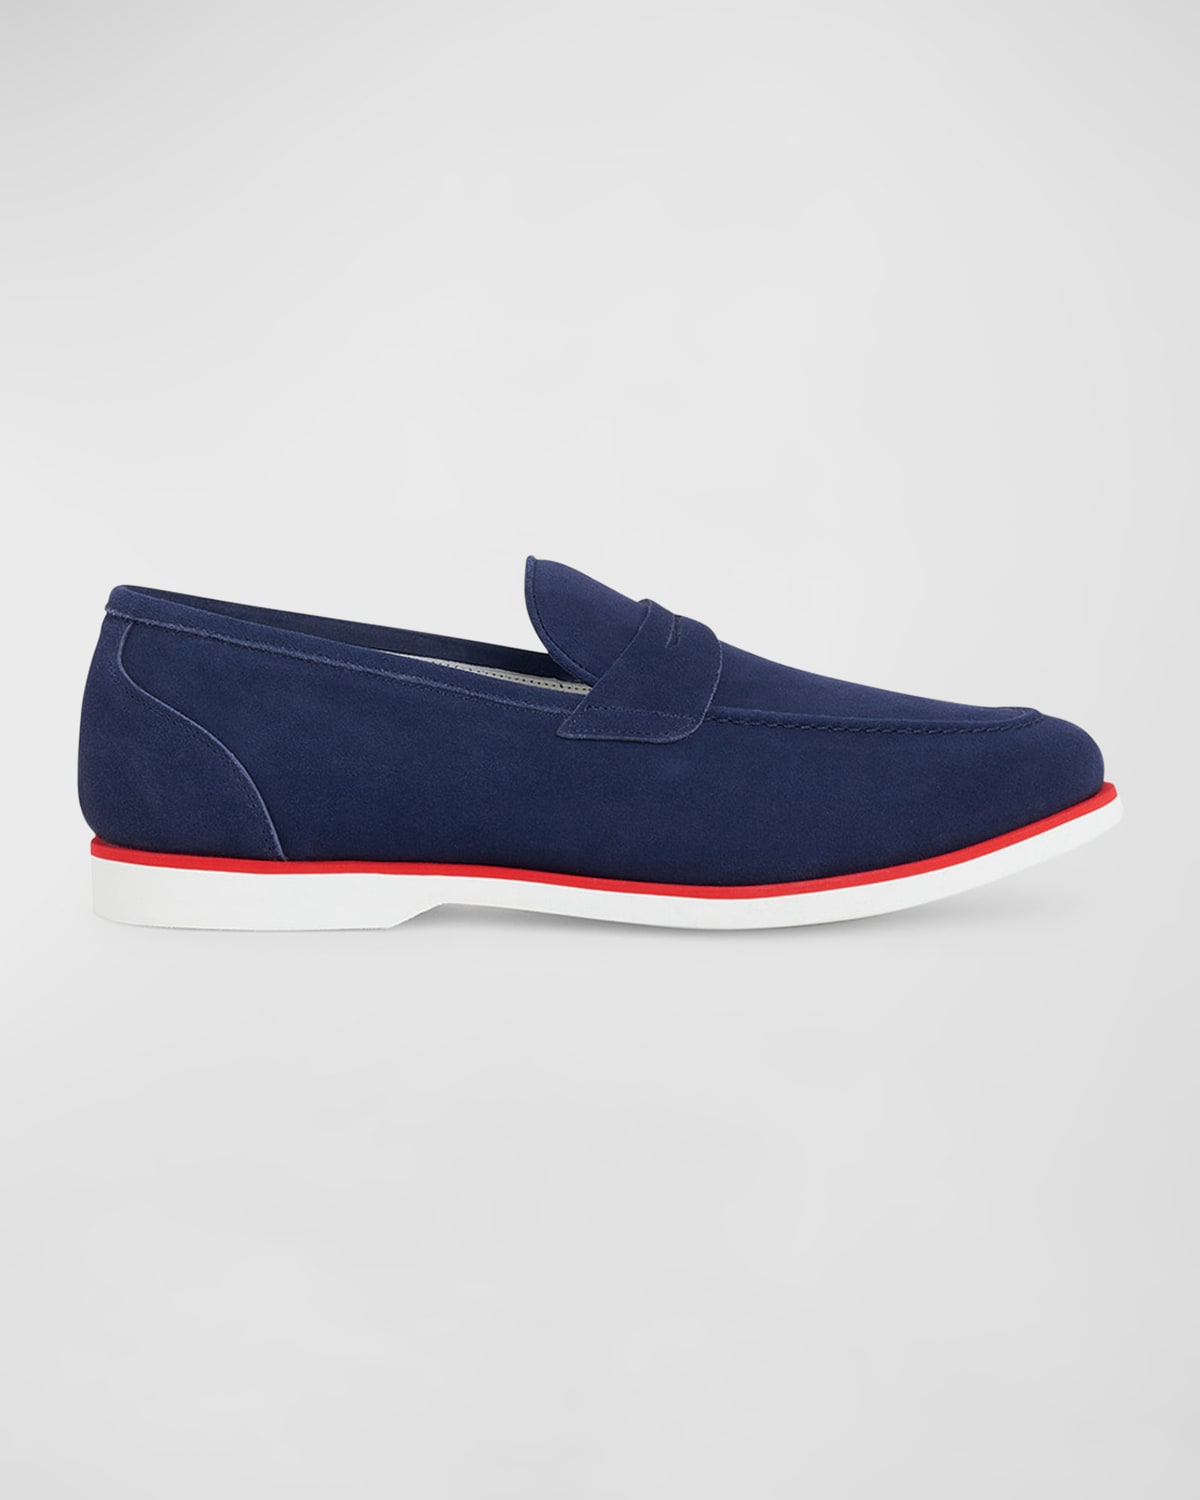 Brunello Cucinelli Men's Suede Hybrid Moccasin Loafers | Neiman Marcus